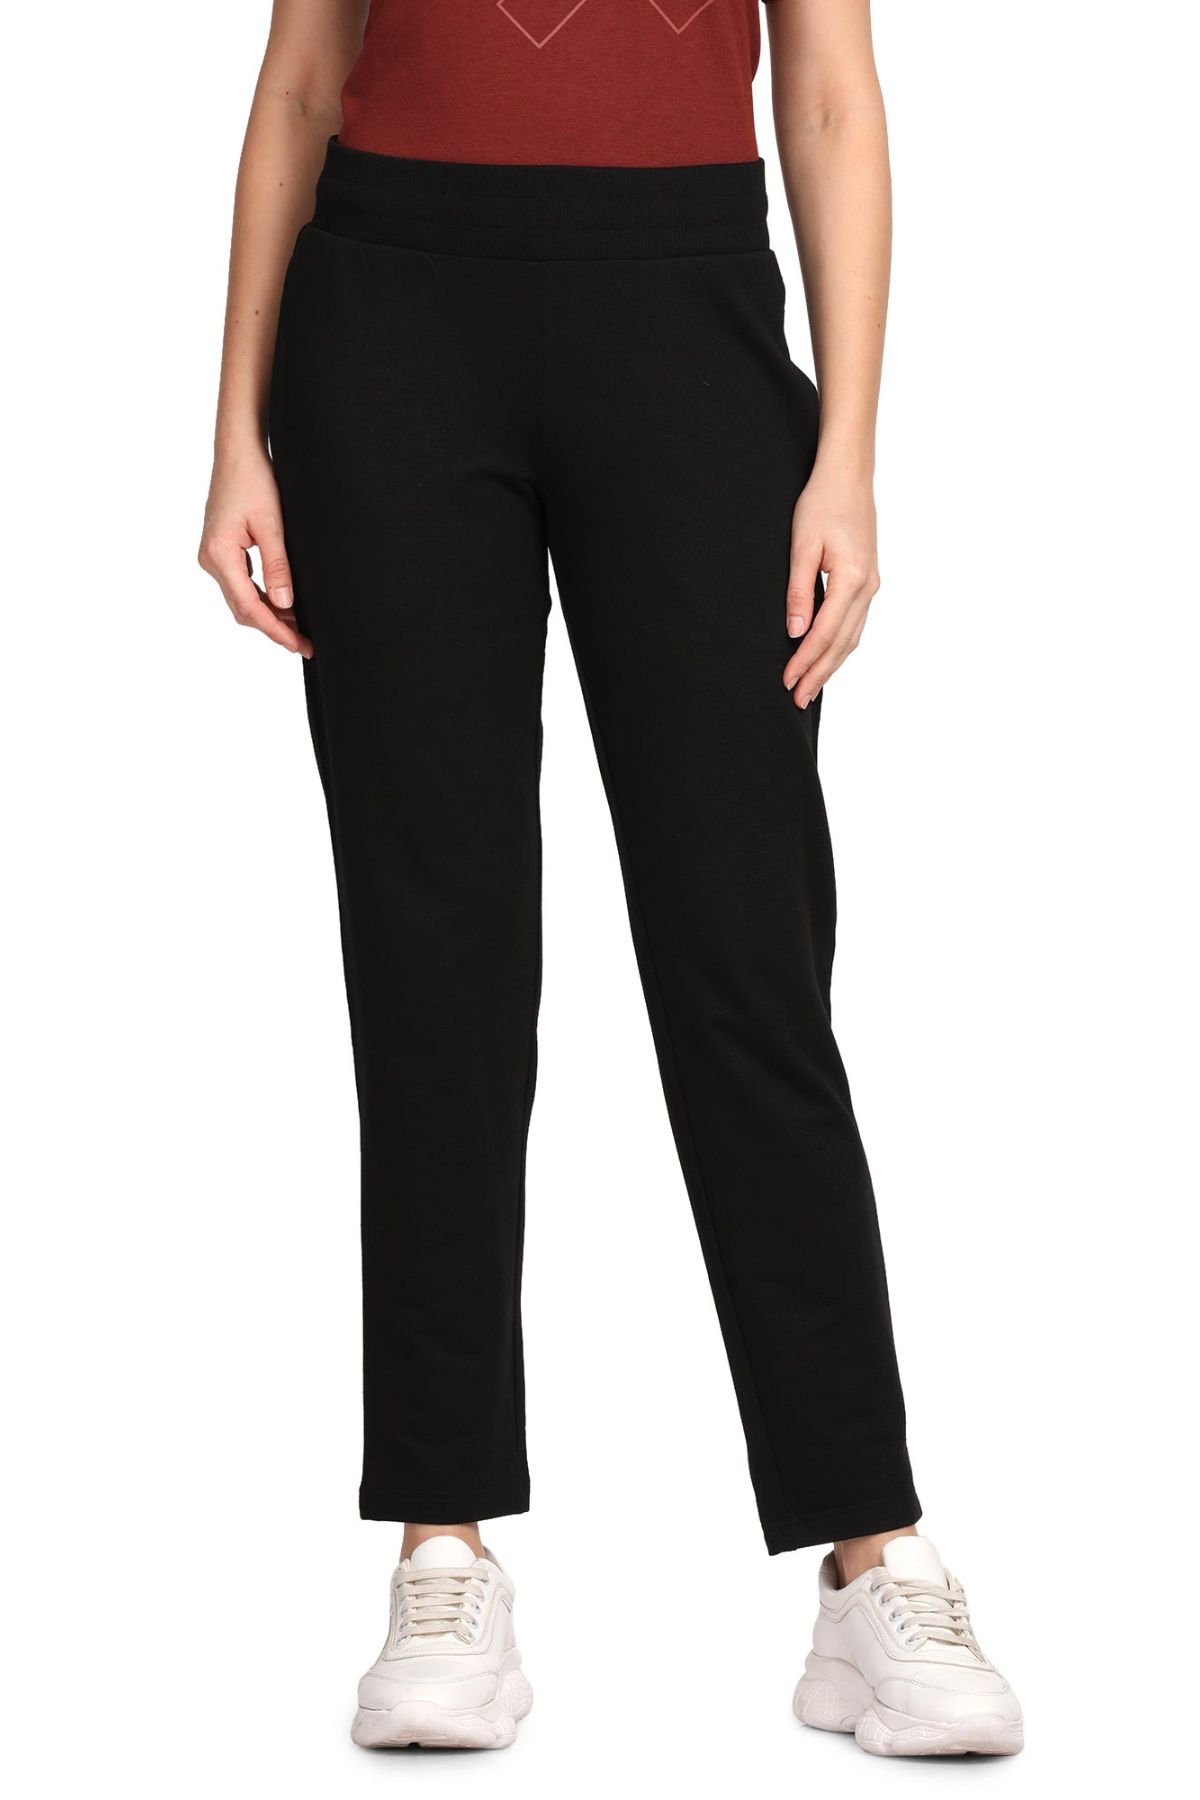 Buy Black Track Pants for Women by Puma Online | Ajio.com